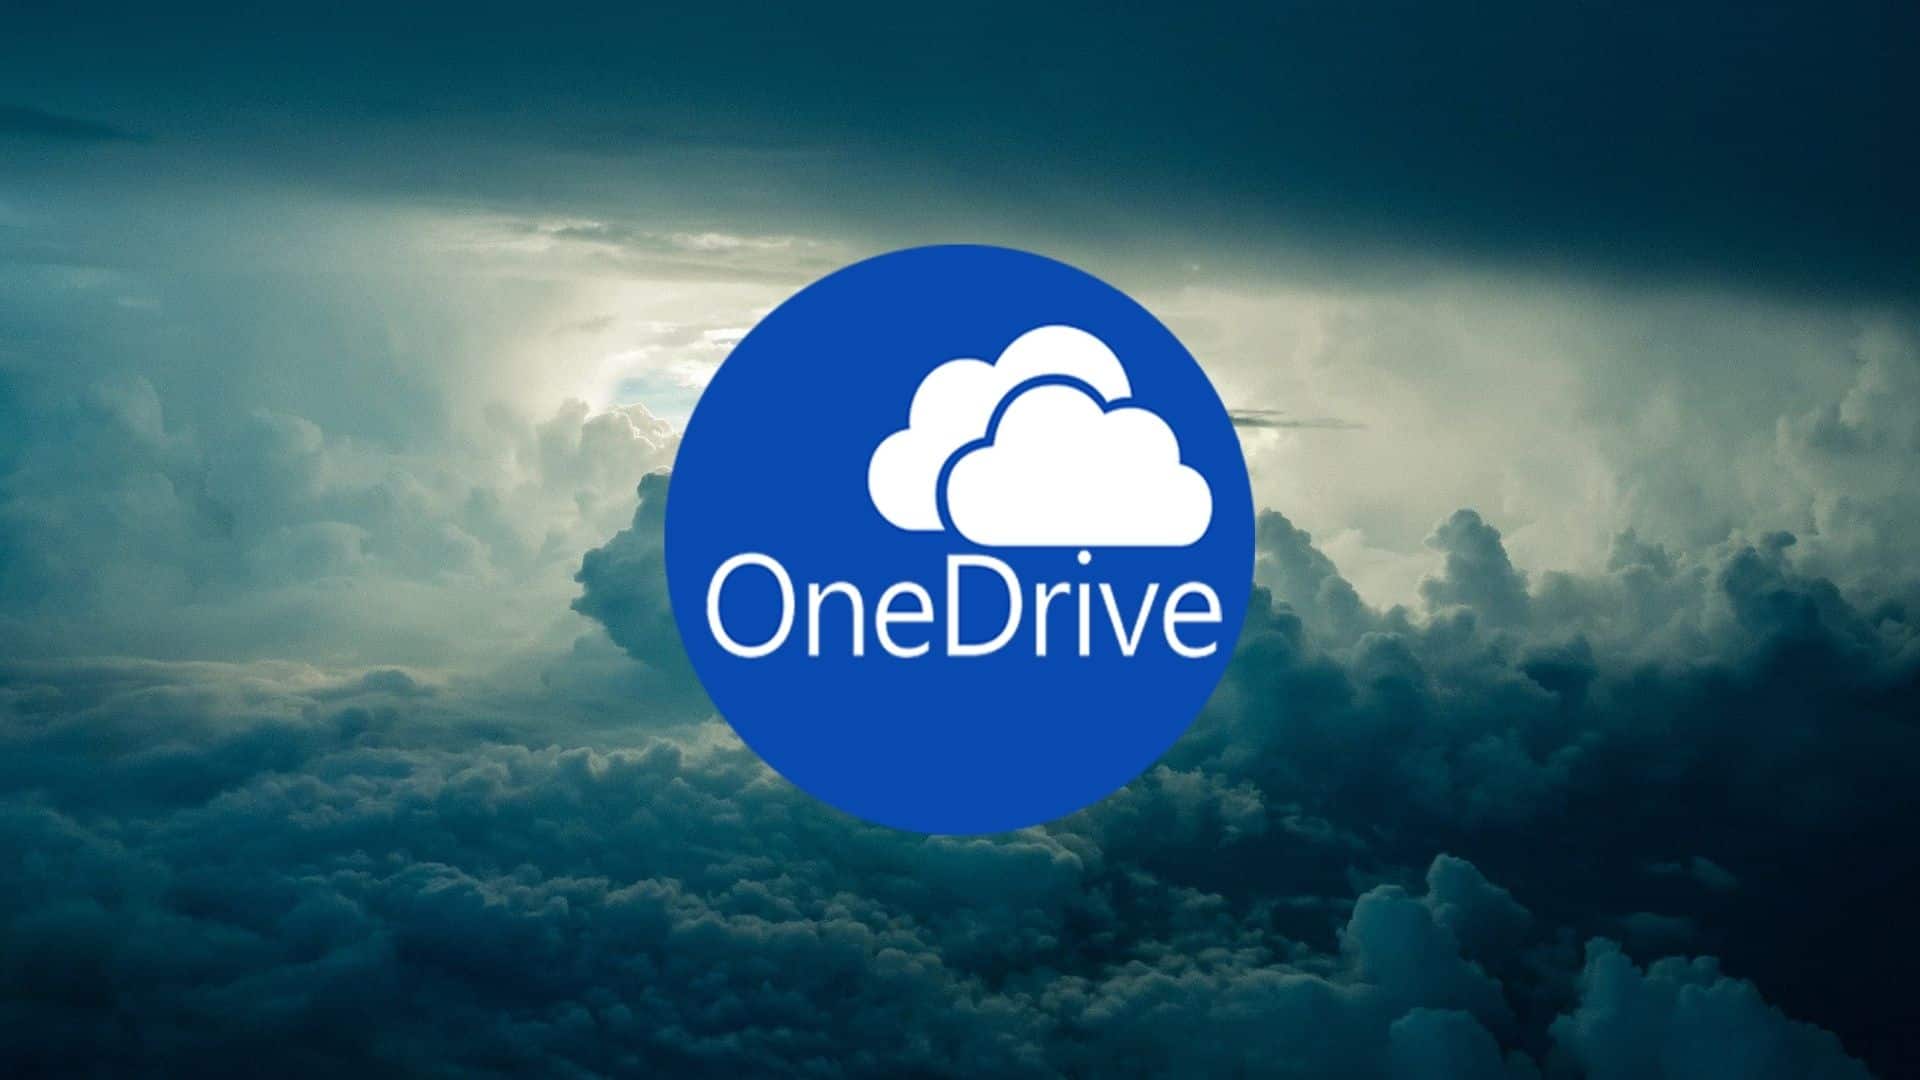 OneDrive Code Crack - wide 8